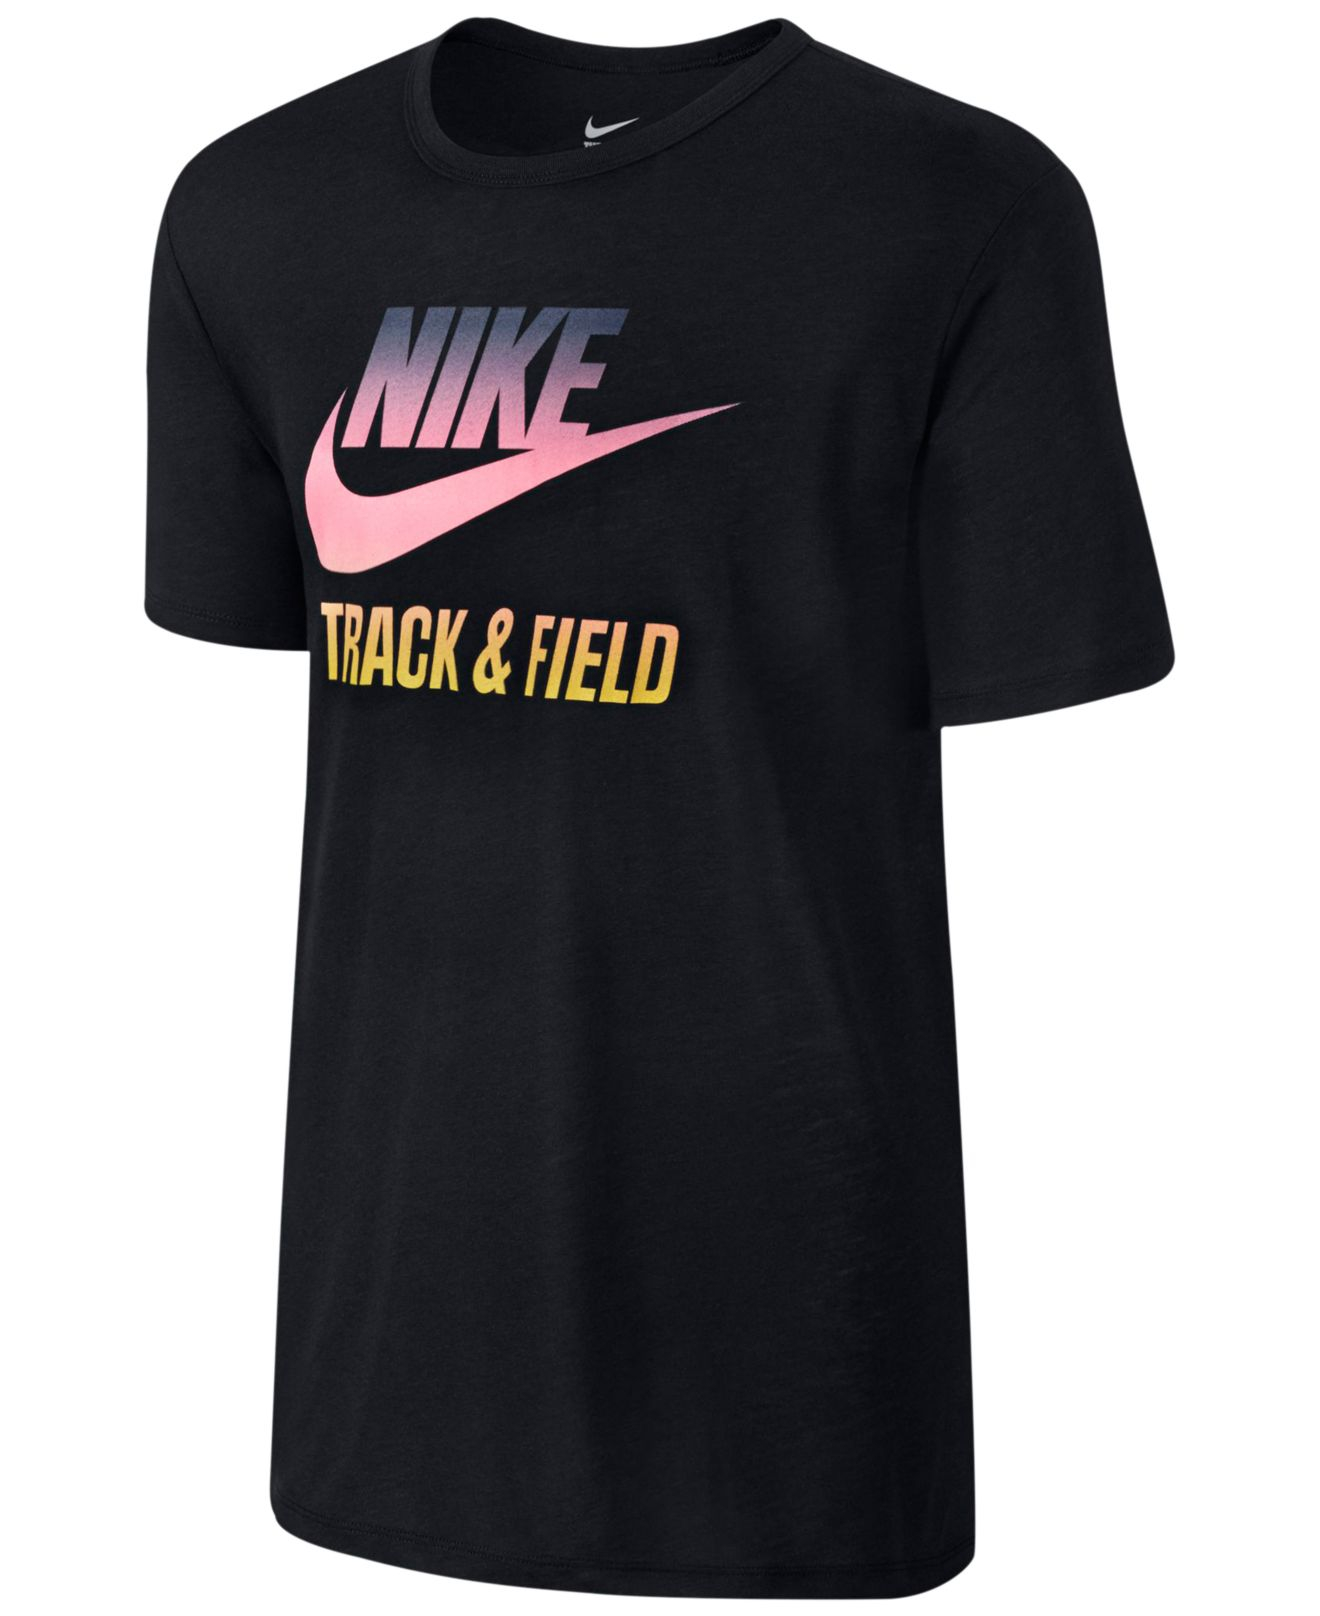 Nike tracking